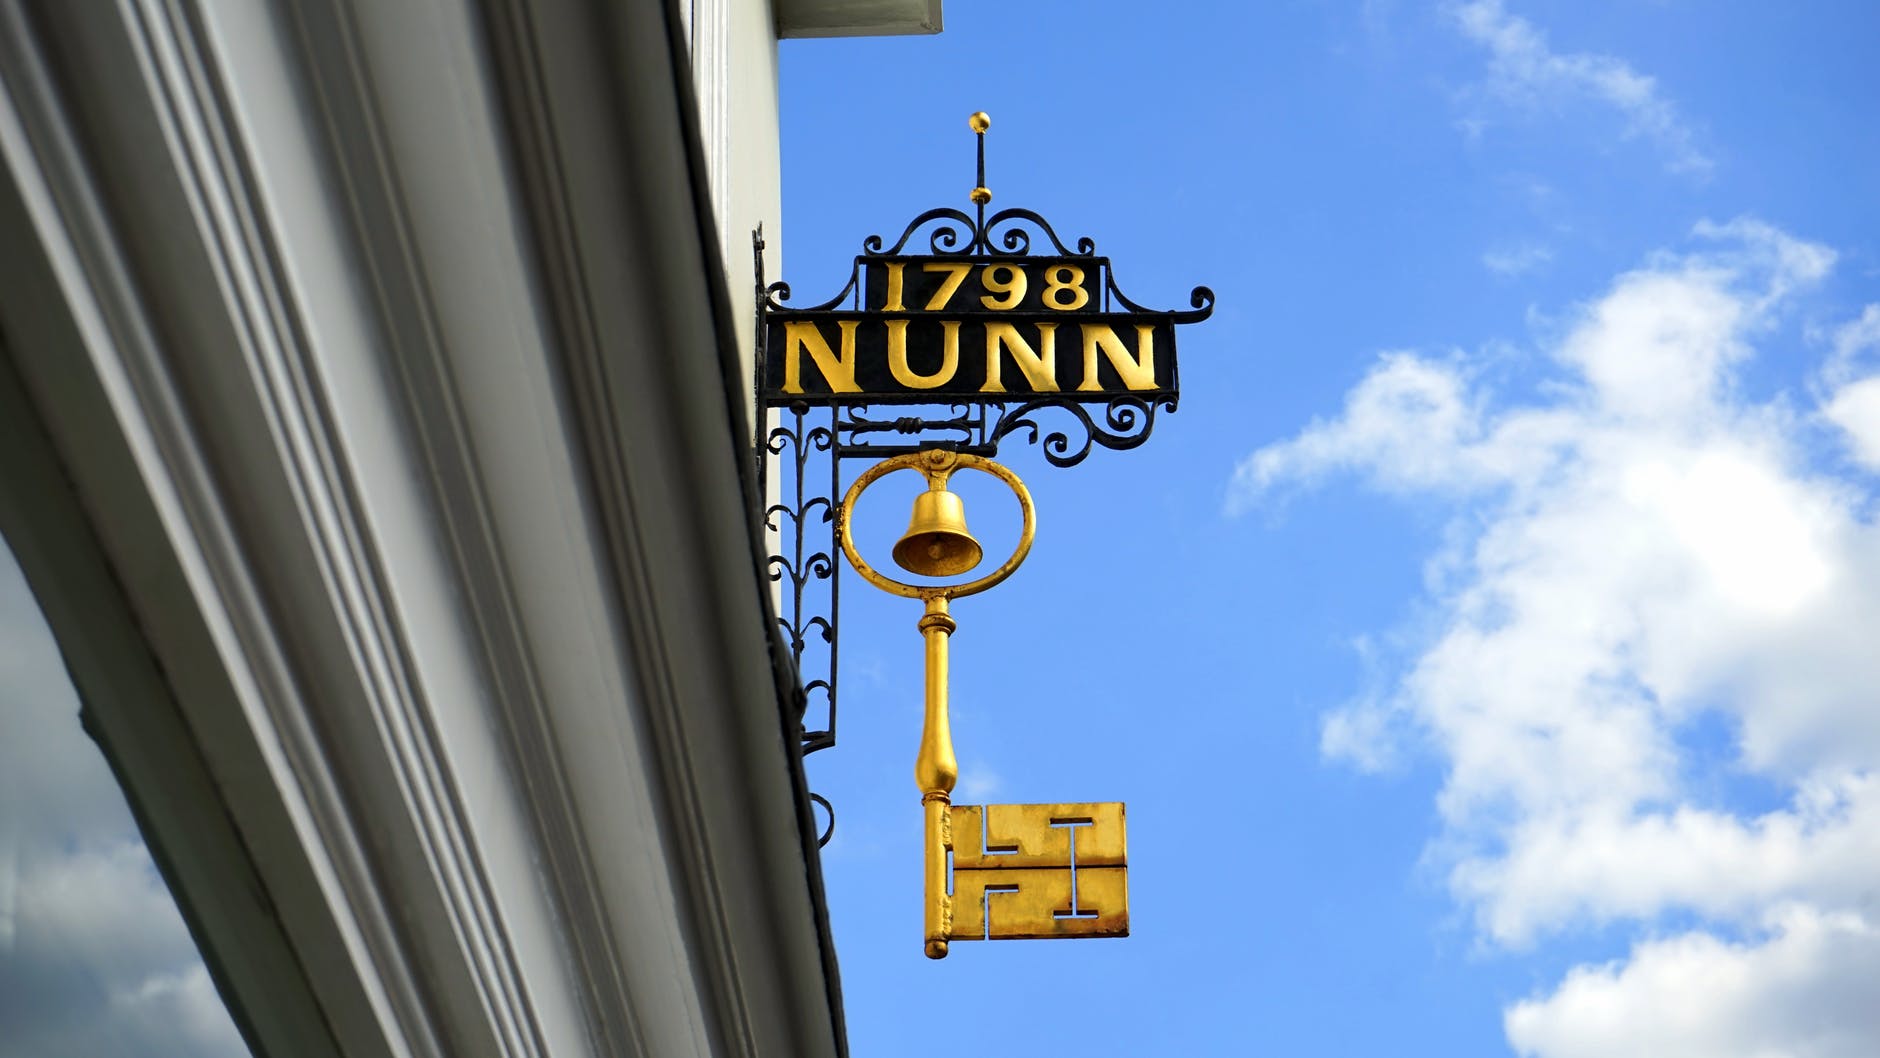 Hanging Address Sign - 1798 Nunn